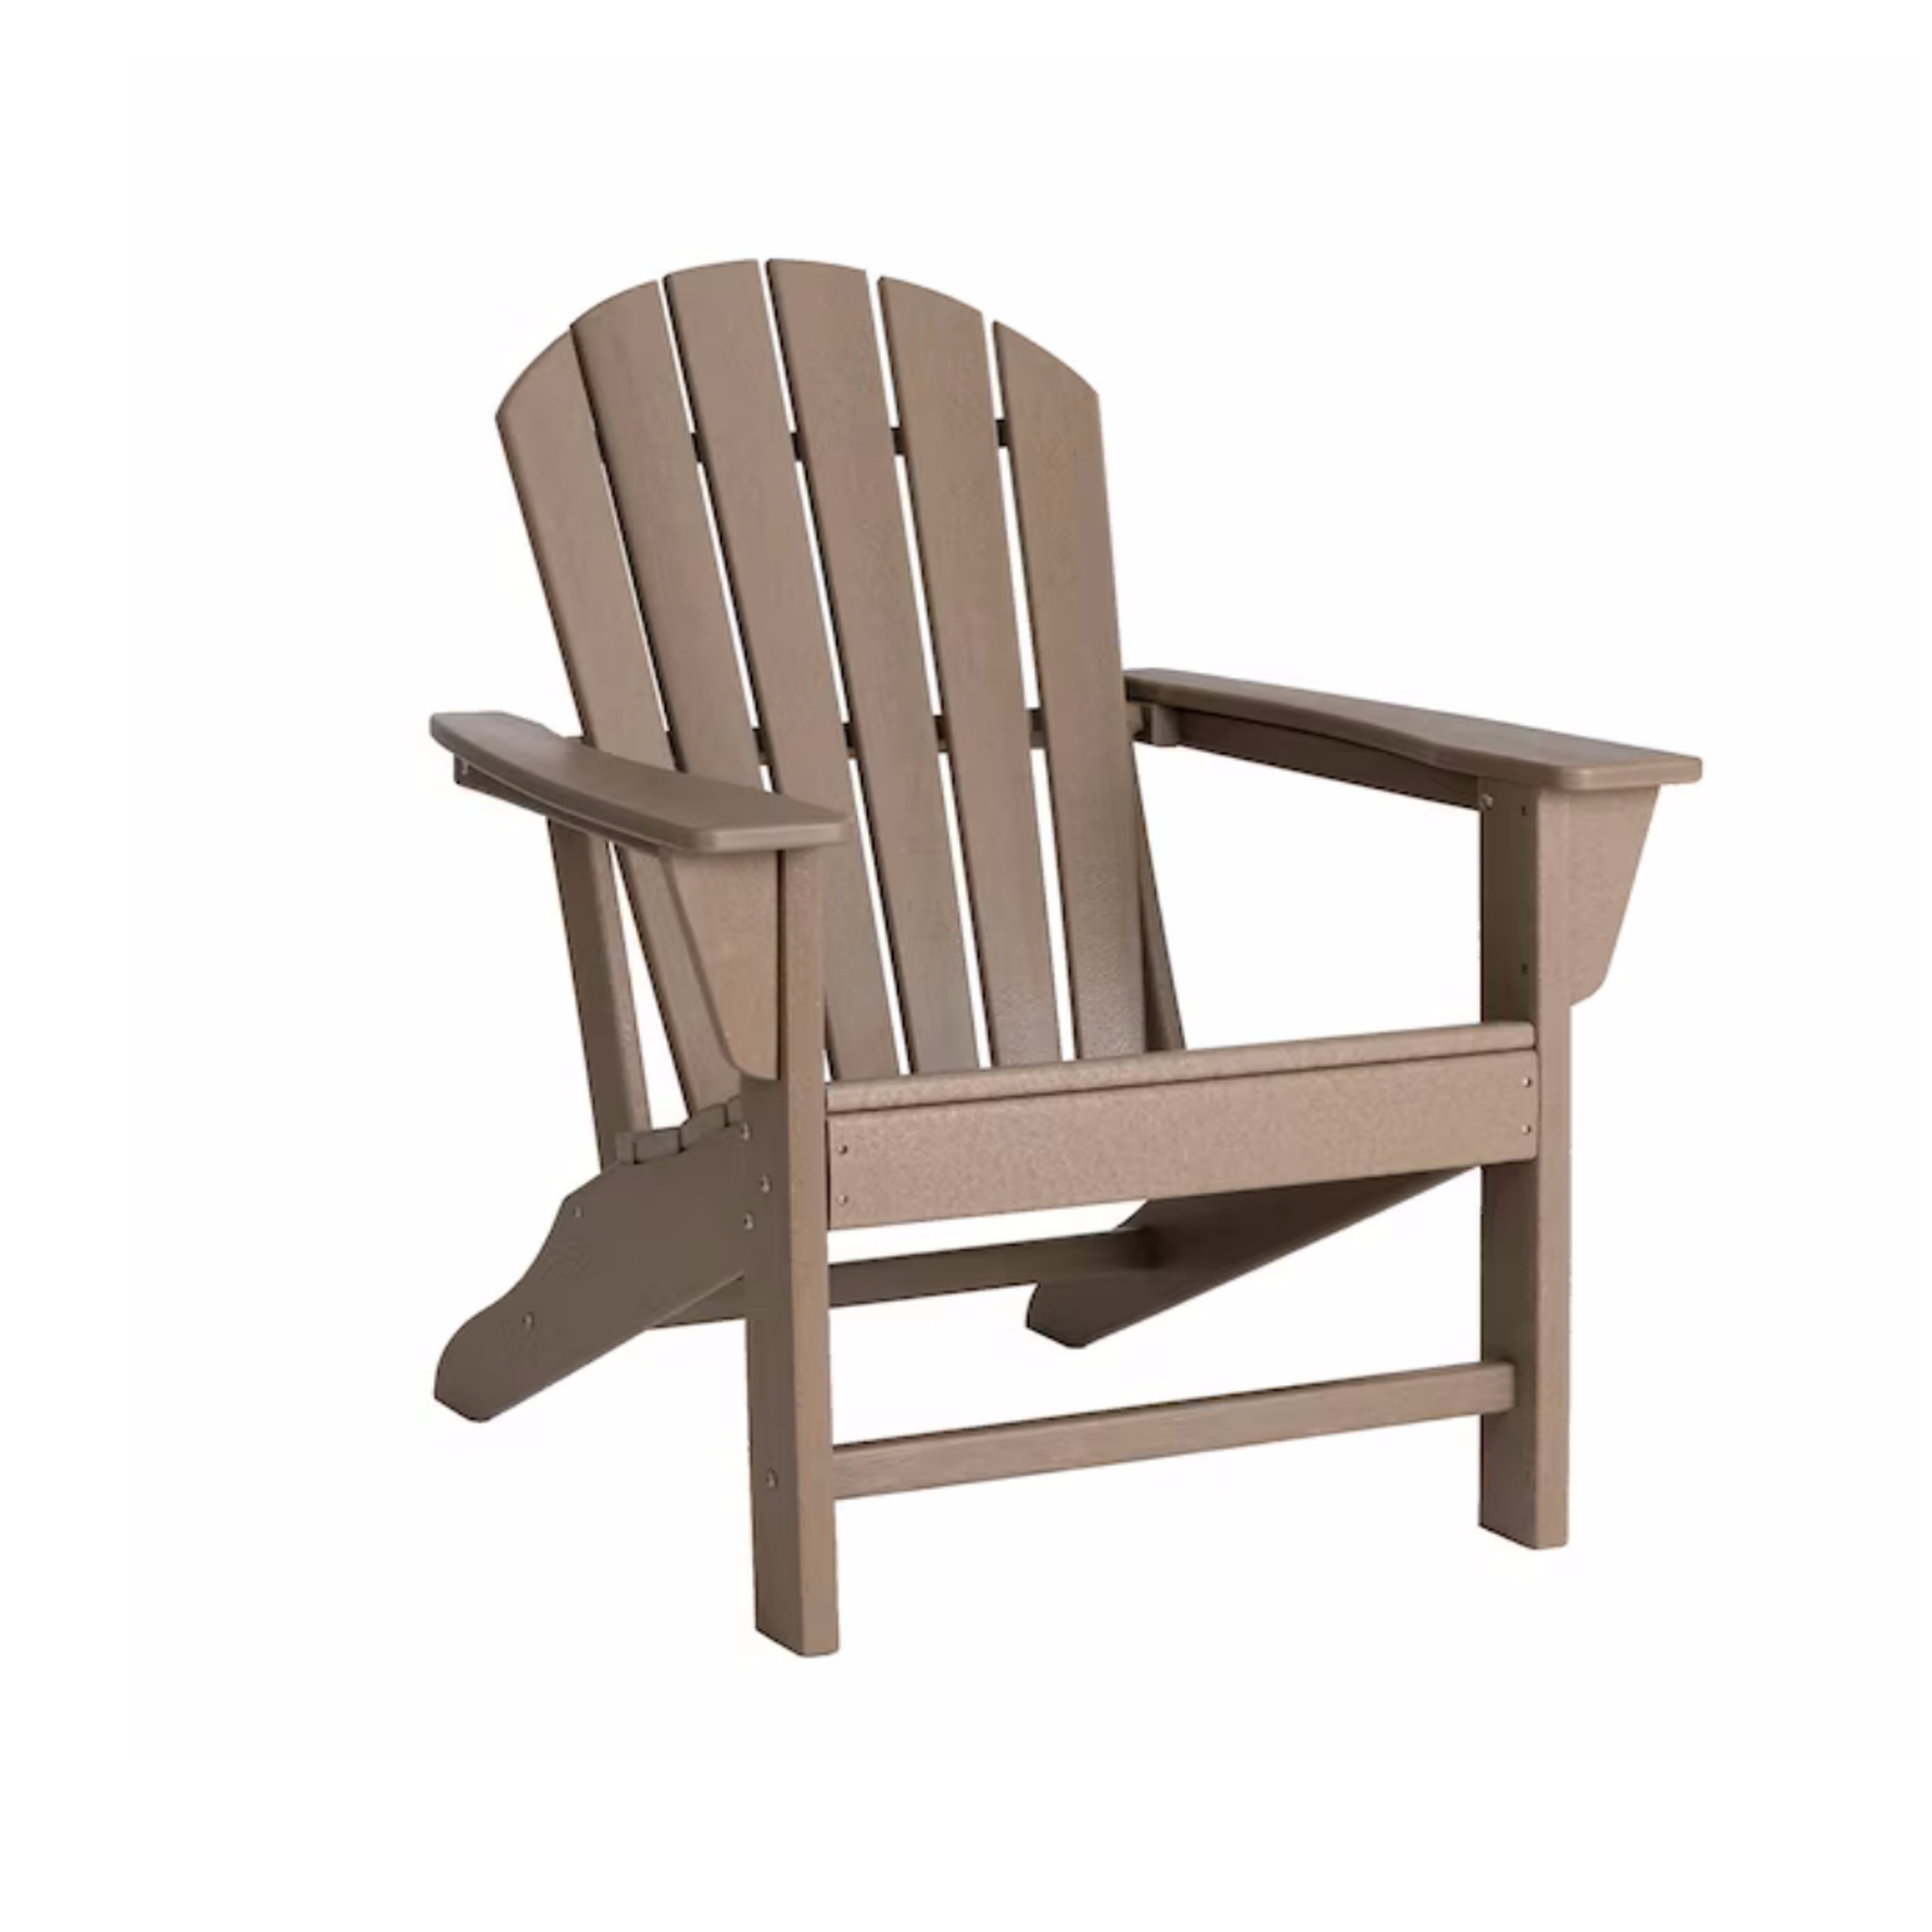 HDPE adirondack chair